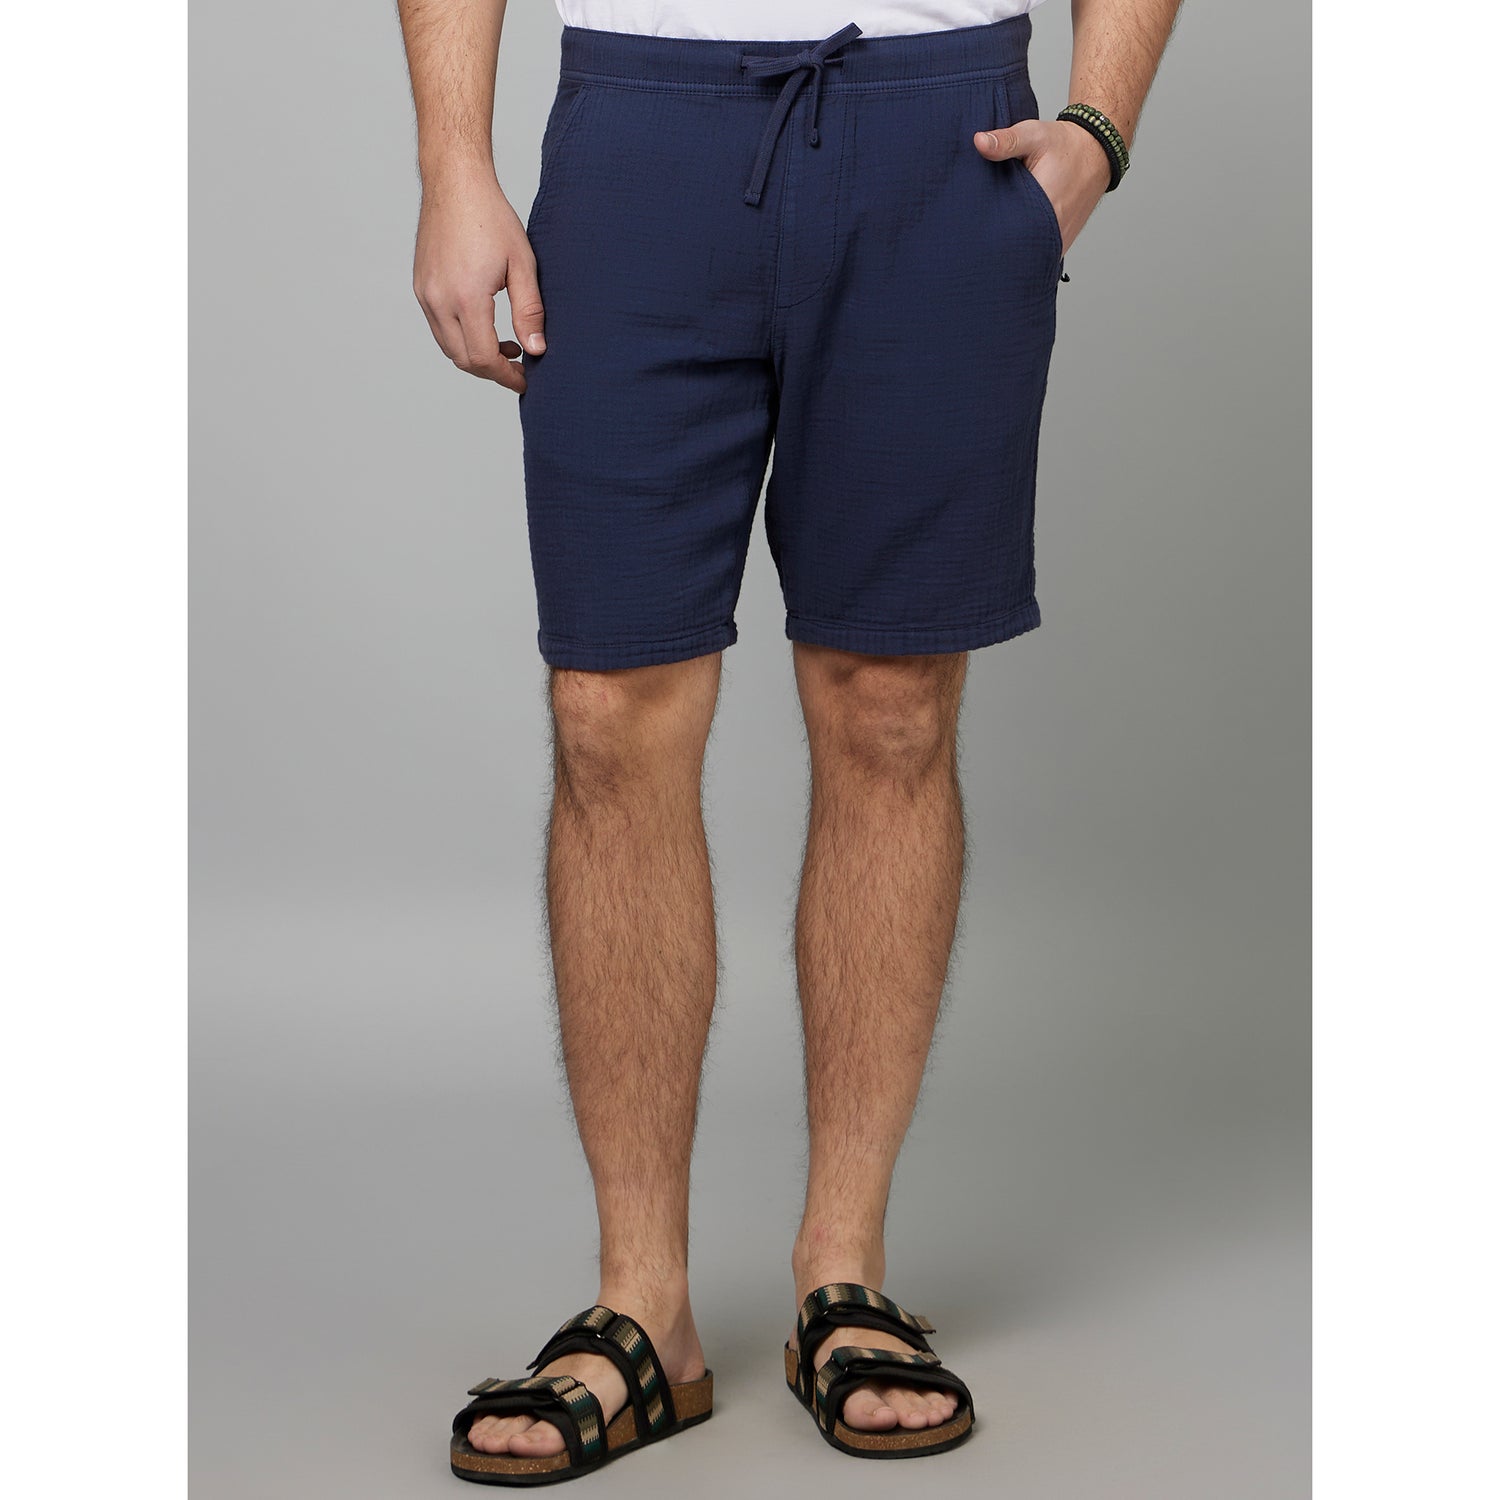 Navy Blue Mid-Rise Regular Fit Casual Shorts (FOBOGAZEBM)